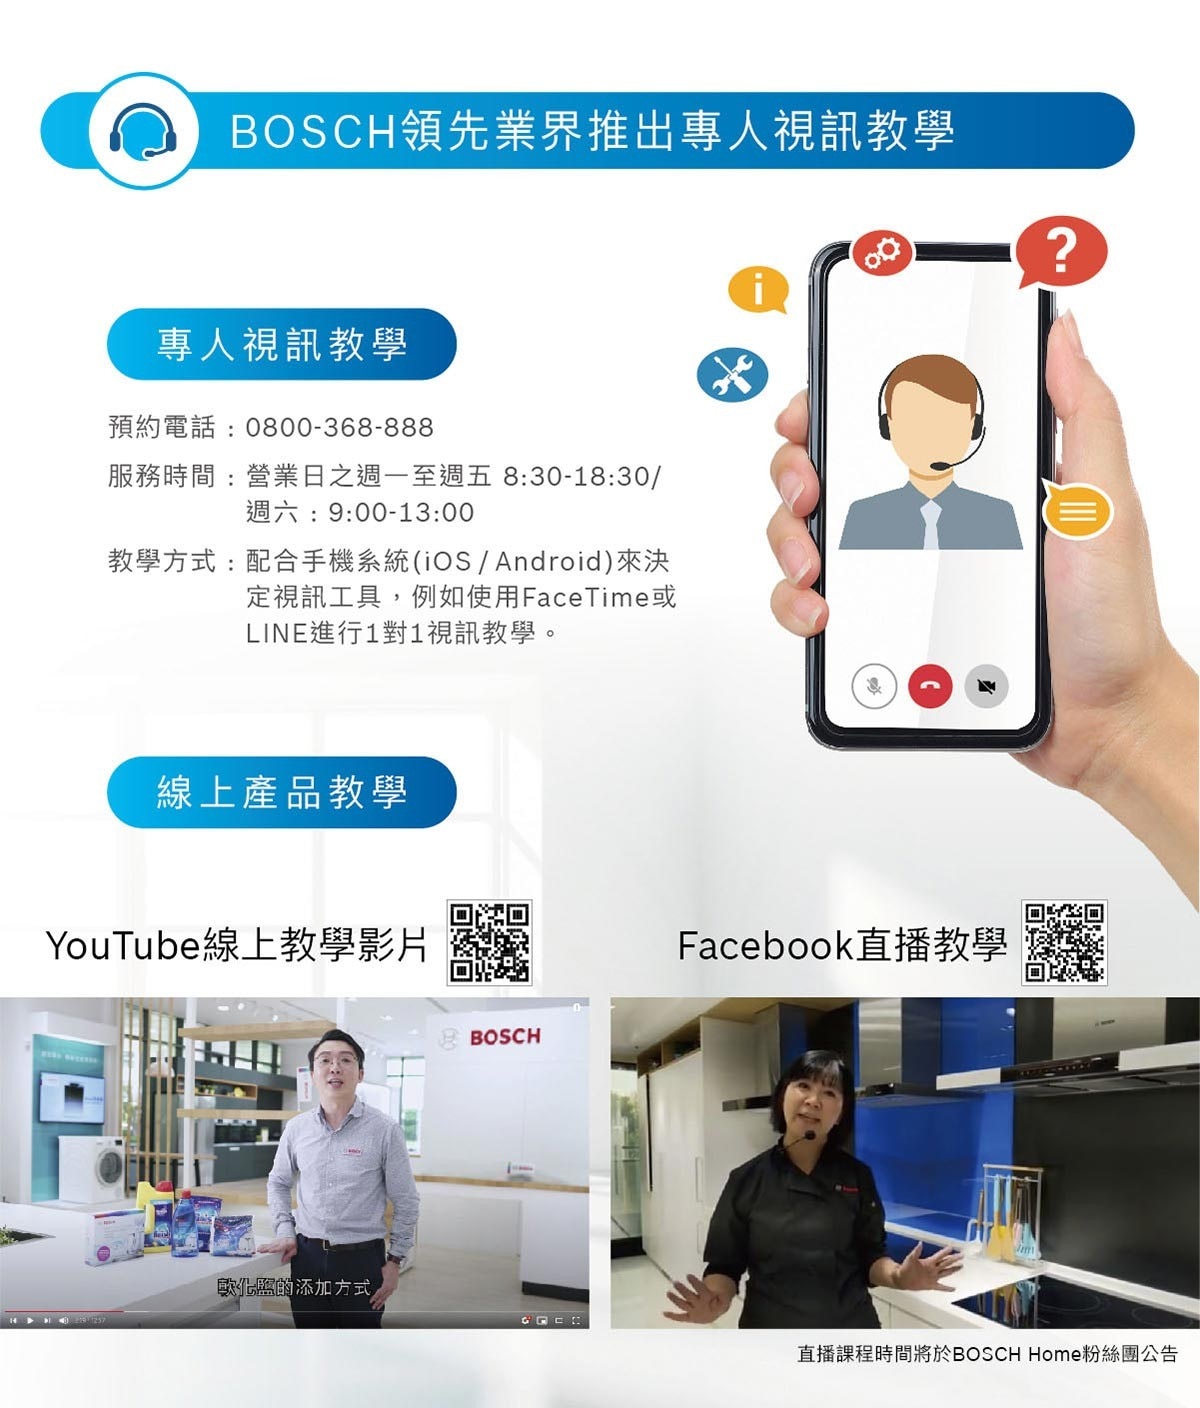 Bosch 領先業界推出專人視訊教學，線上產品教學服務可透過YouTube線上教學影片或Facebook直播教學。